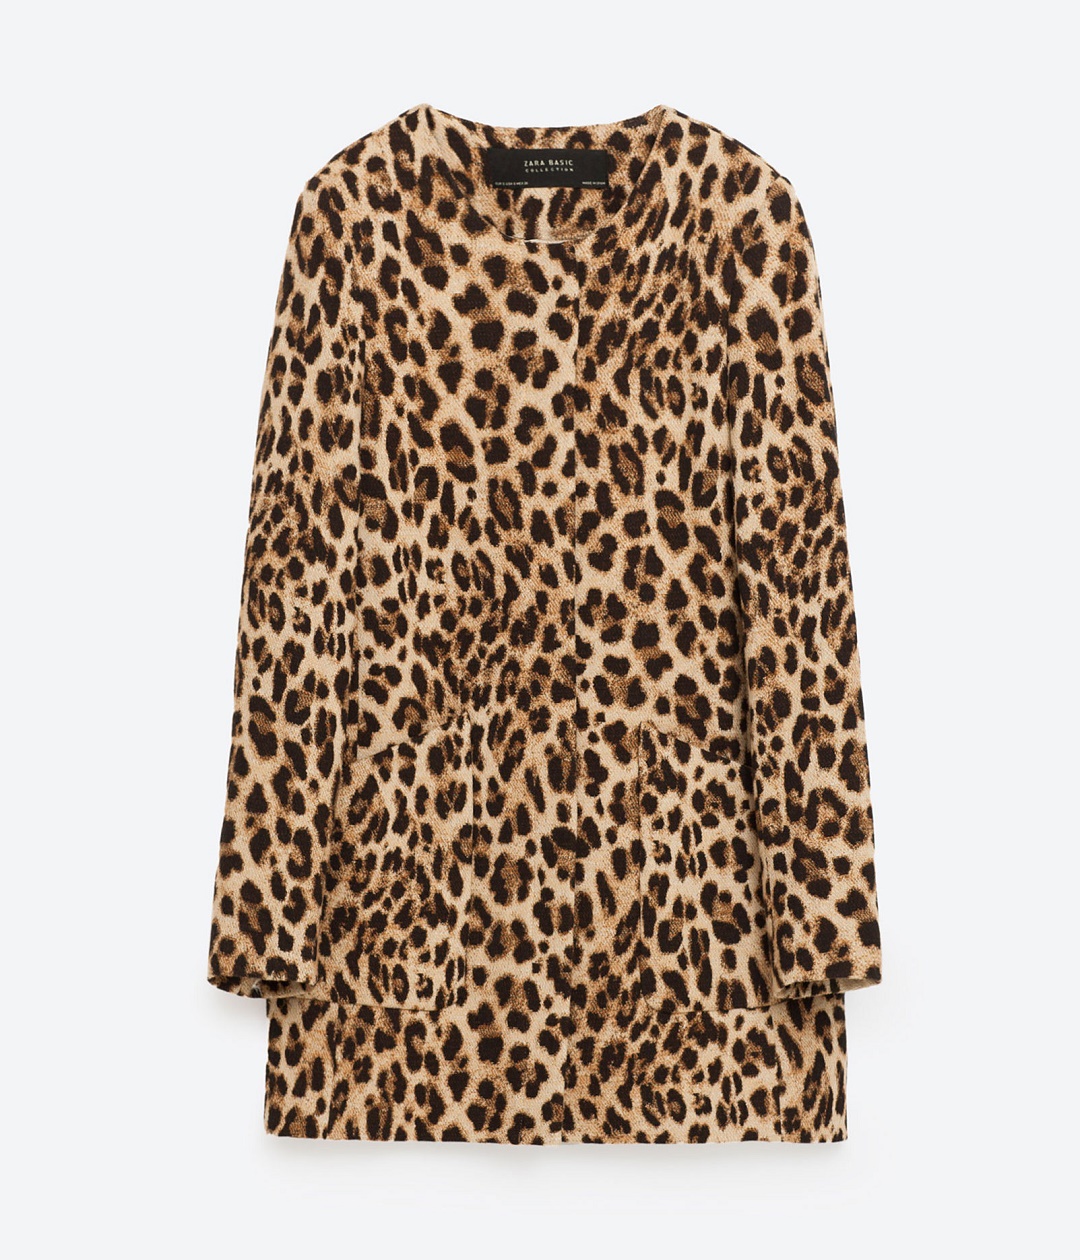 Zara leopard kaput 2